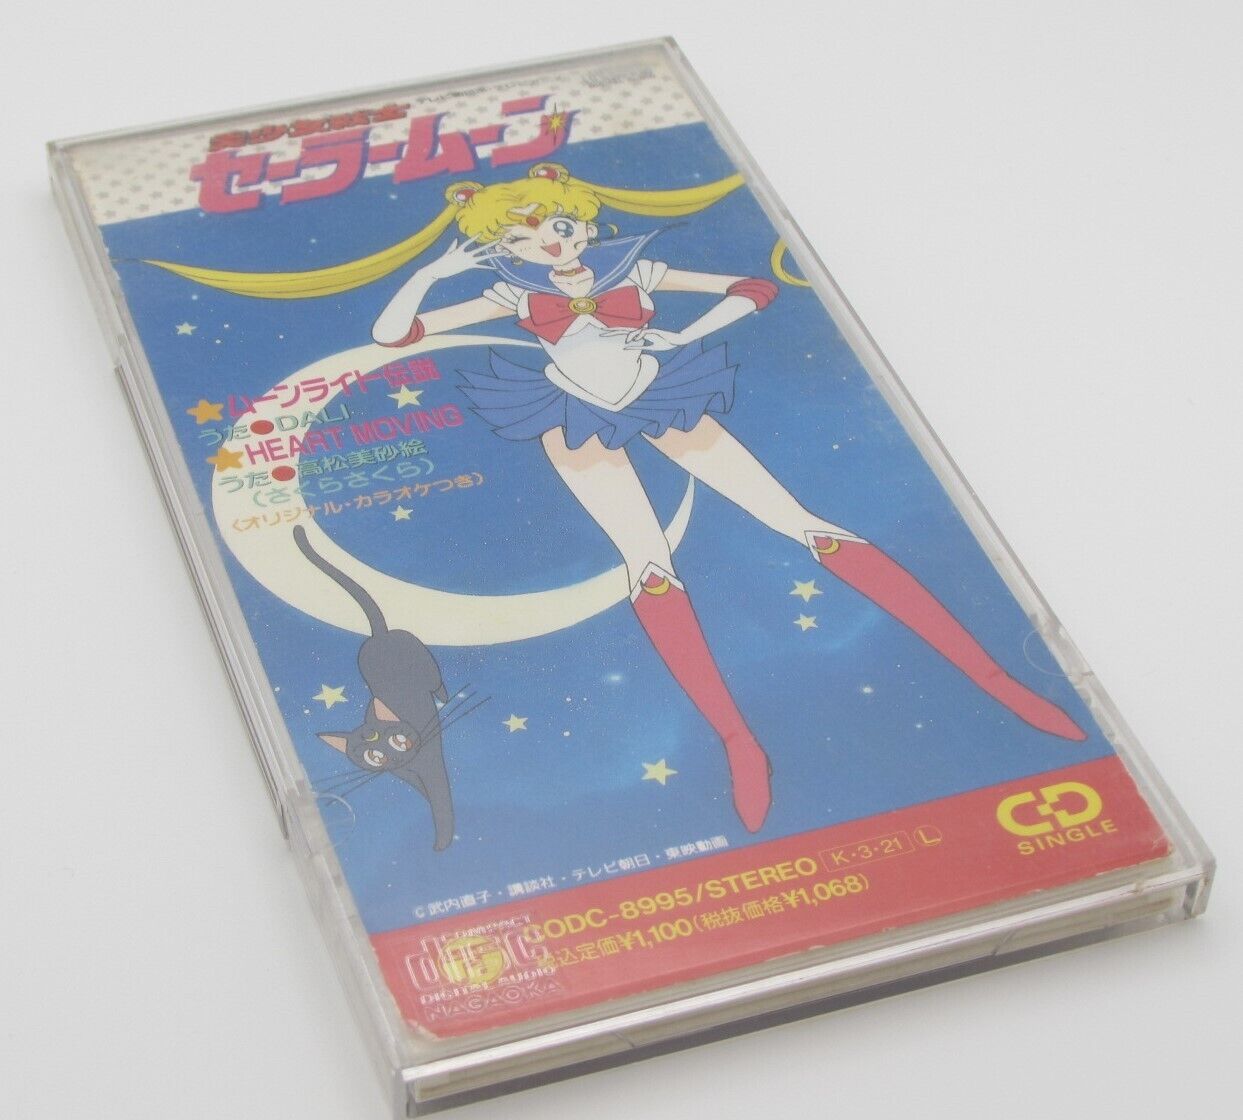 Sailor moon CODC8995   8cm mini CD